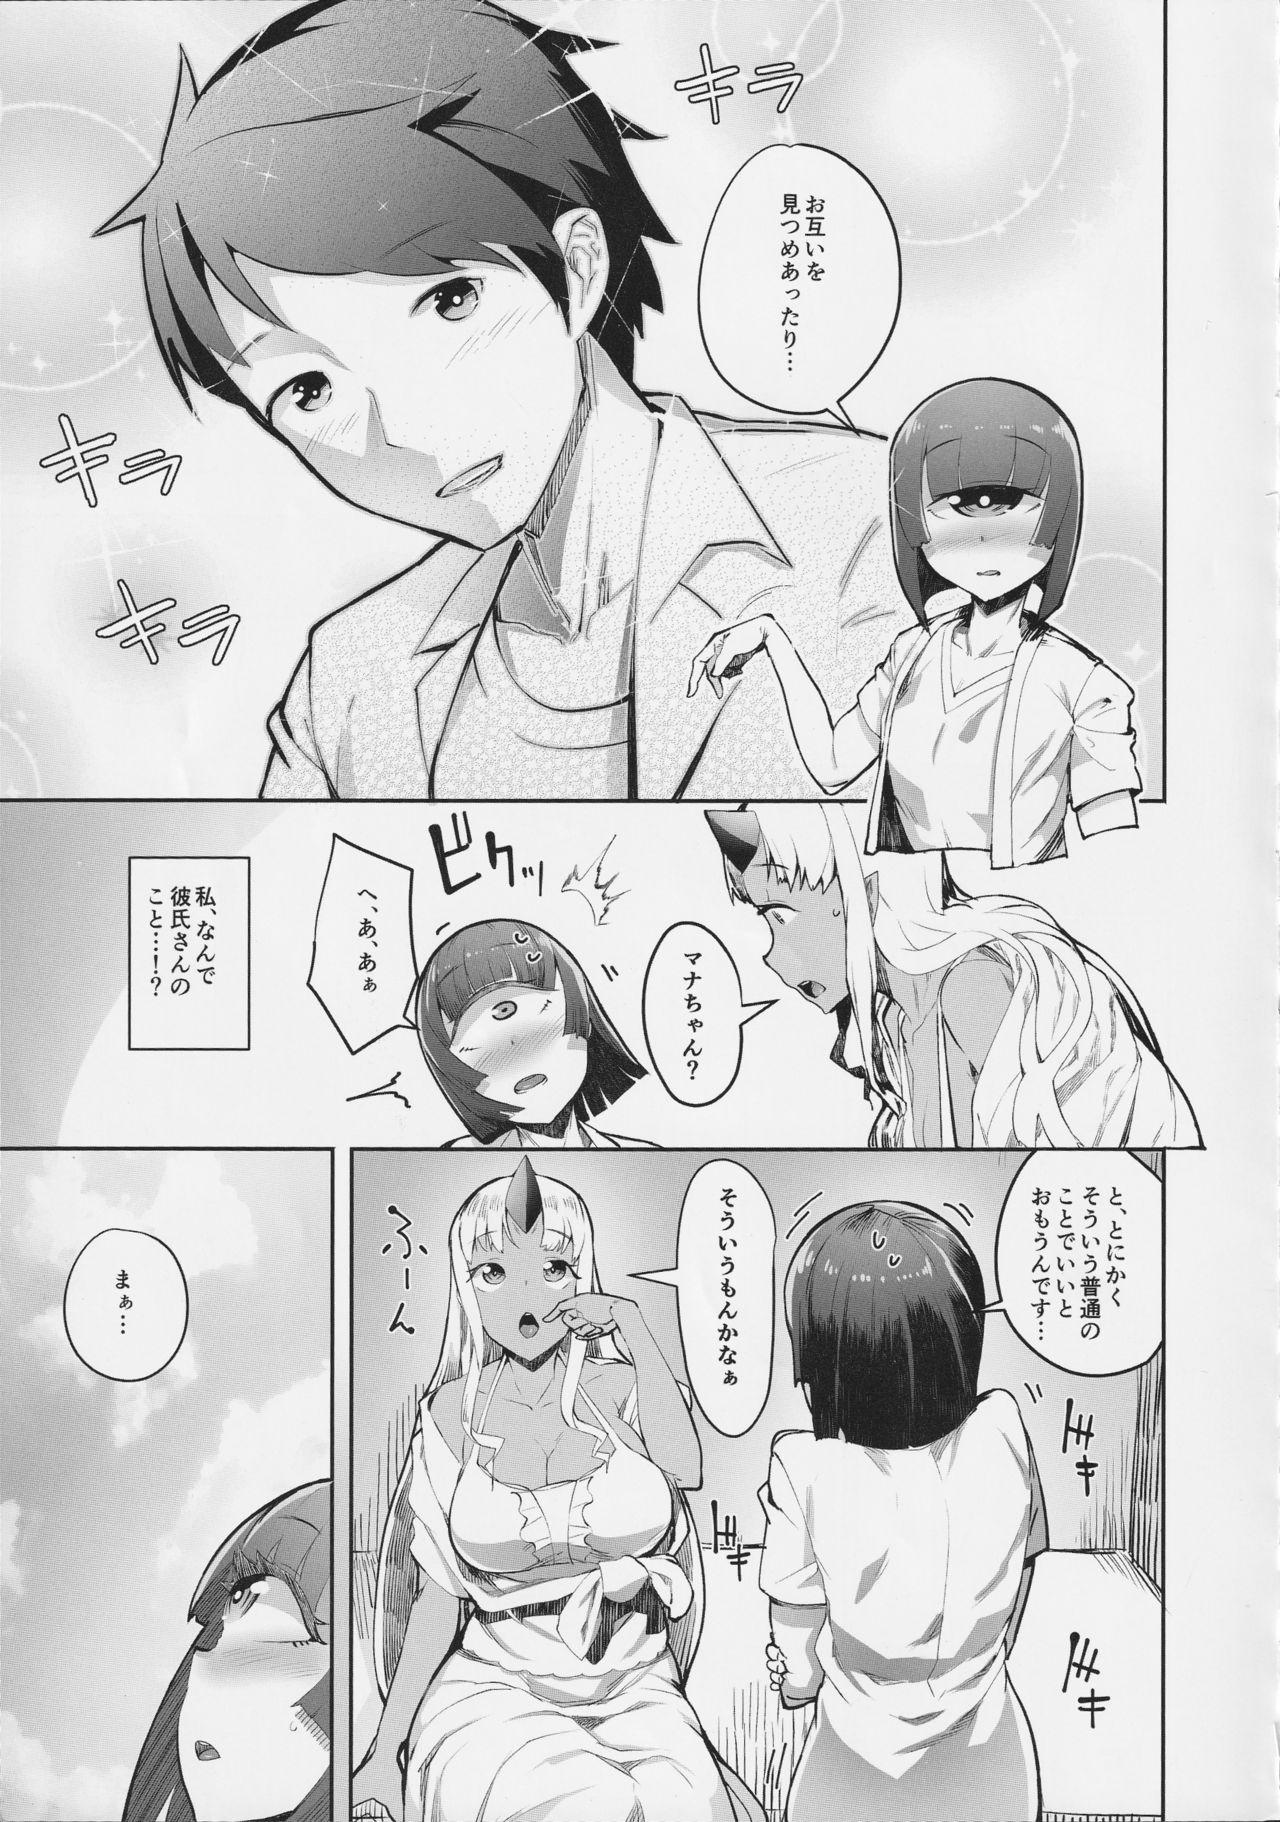 Class Monster Musume no Iru Nichijou SS ANTHOLOGY - Everyday Life with Monster Girls - Monster musume no iru nichijou Bro - Page 10